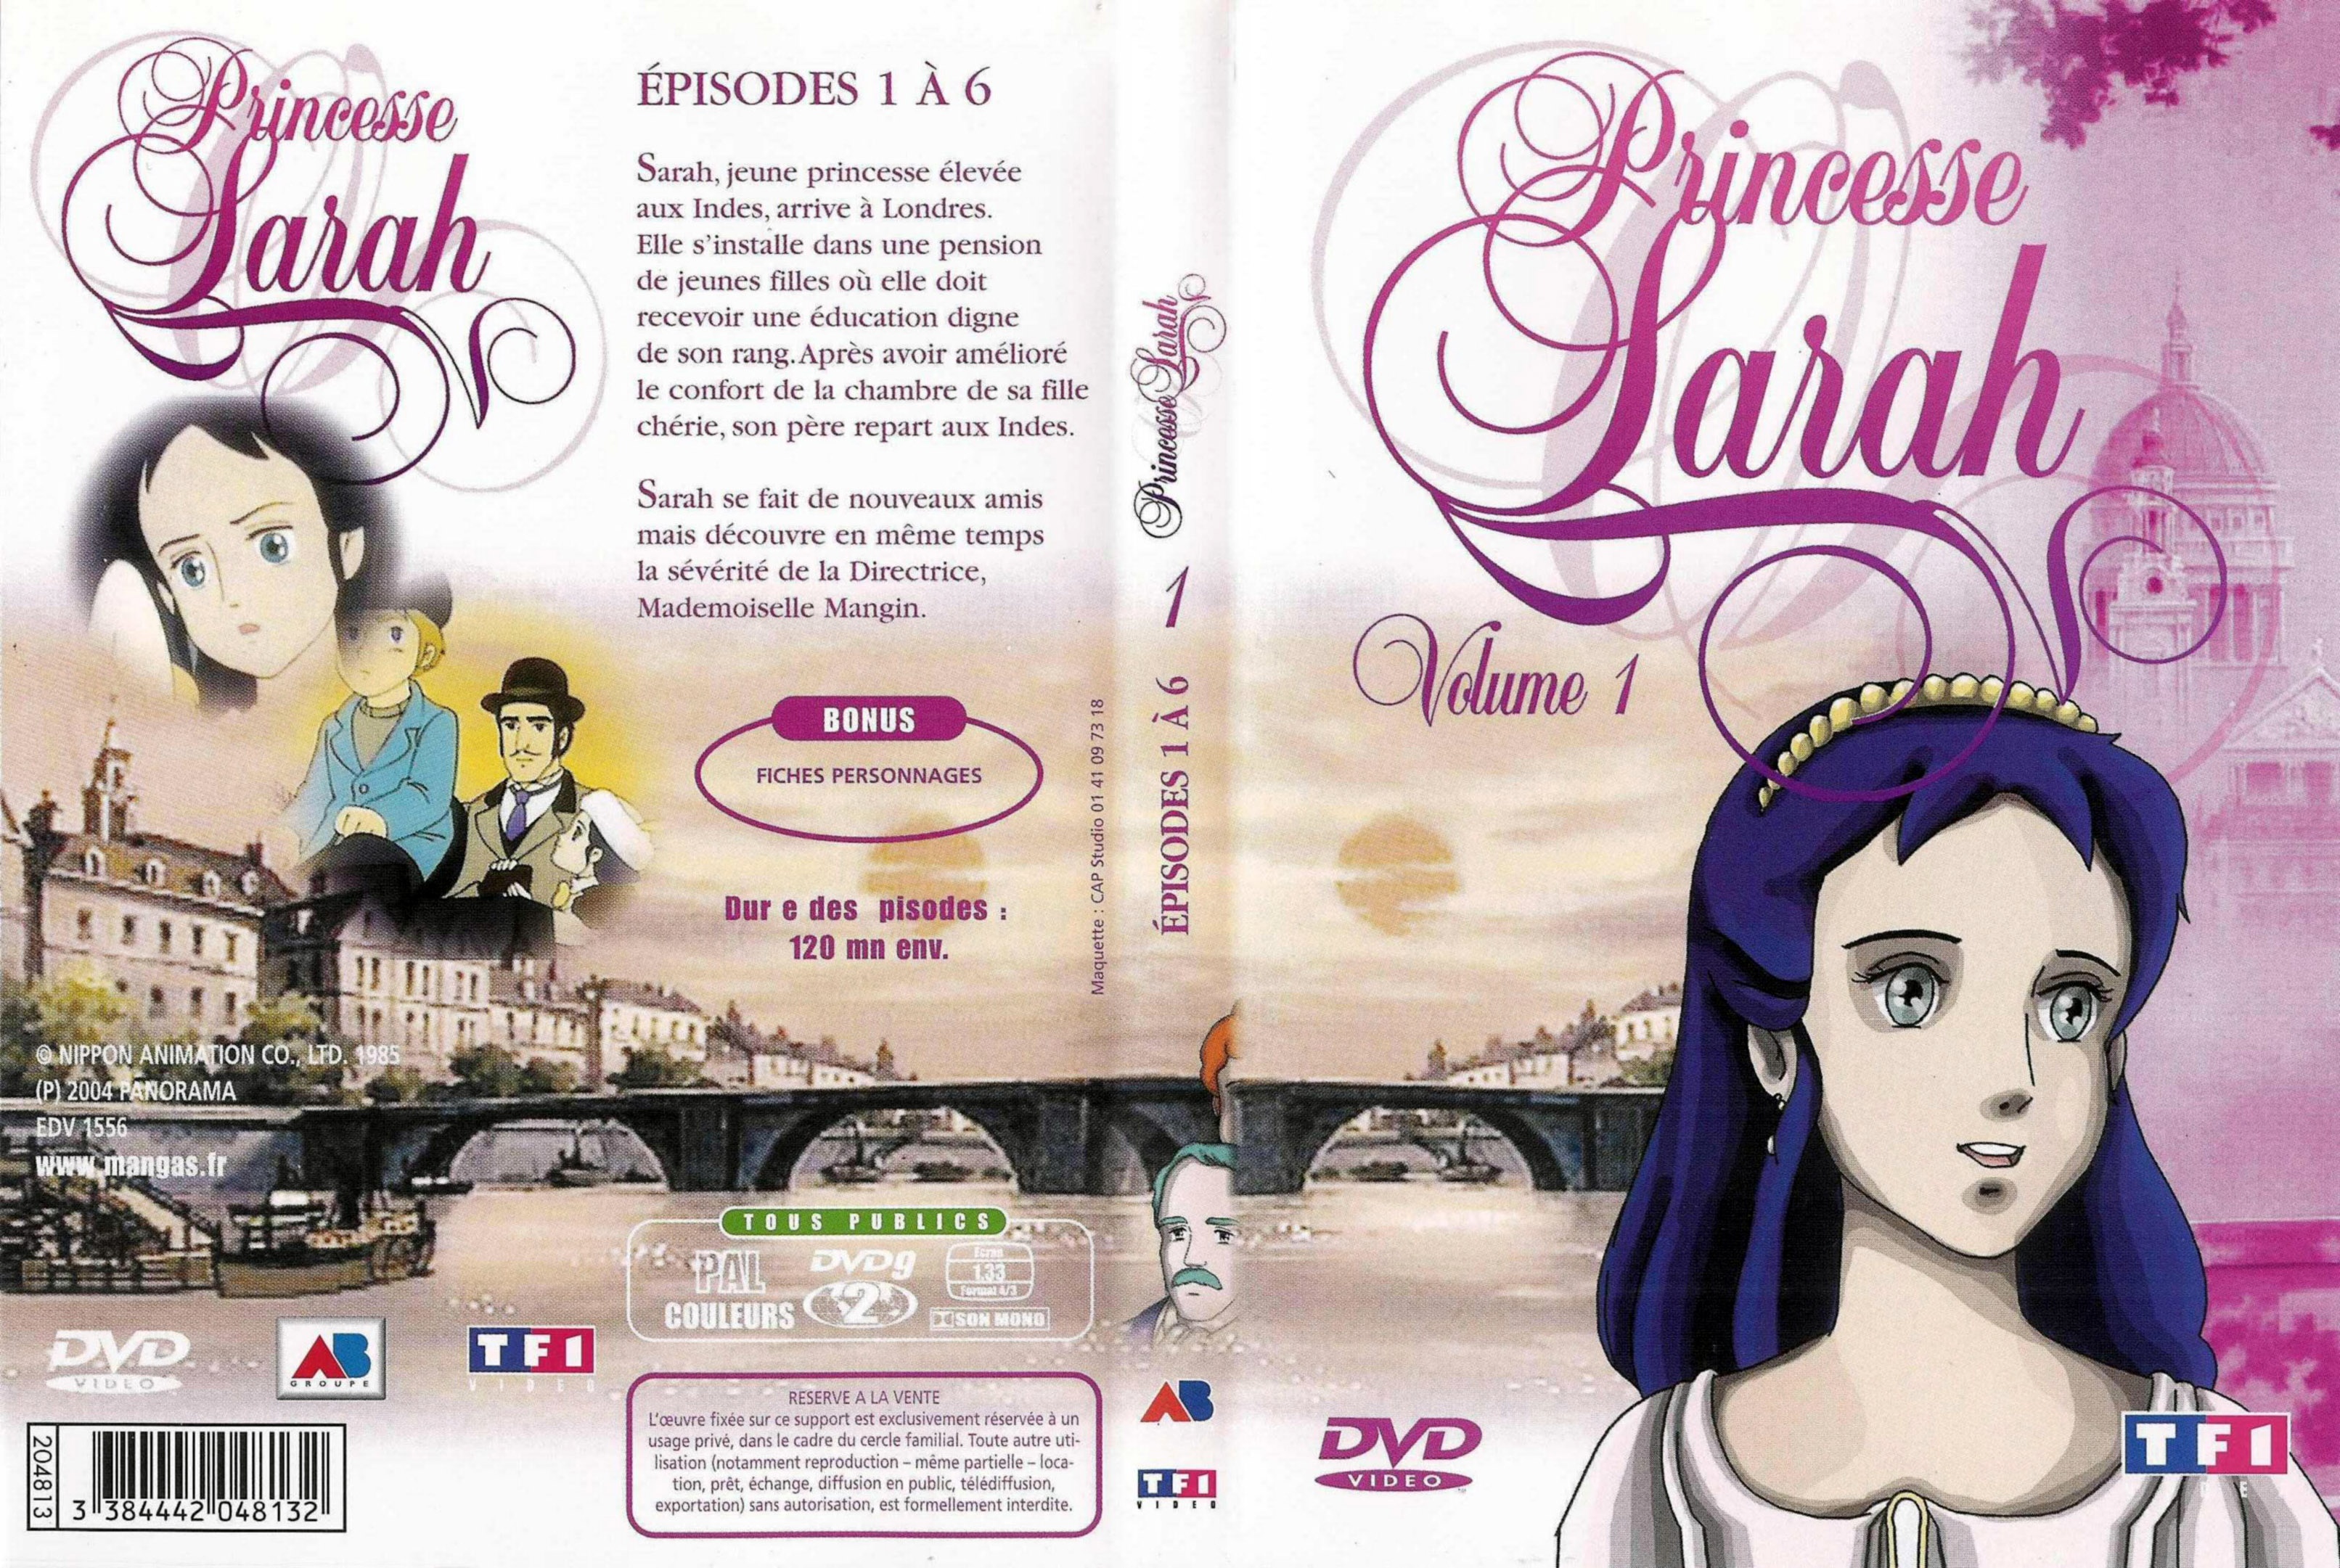 Jaquette DVD Princesse Sarah vol 1